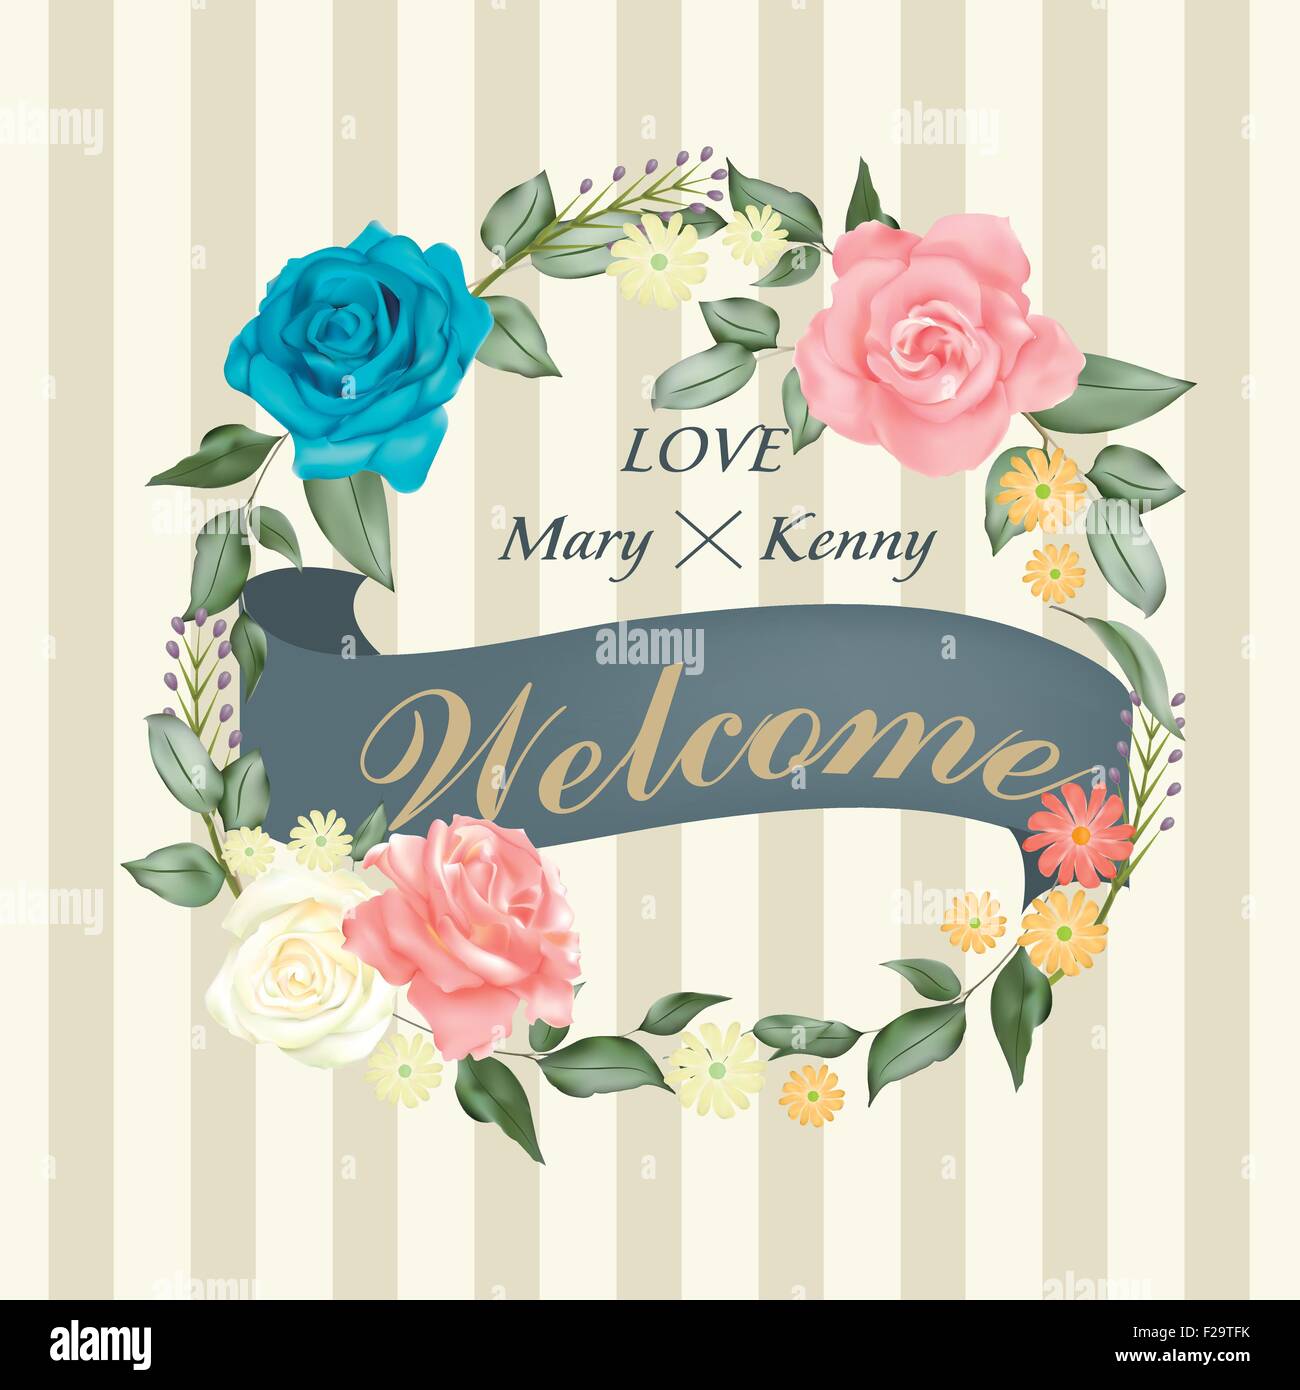 romantic floral wedding invitation design with elegant wreath Stock Vector